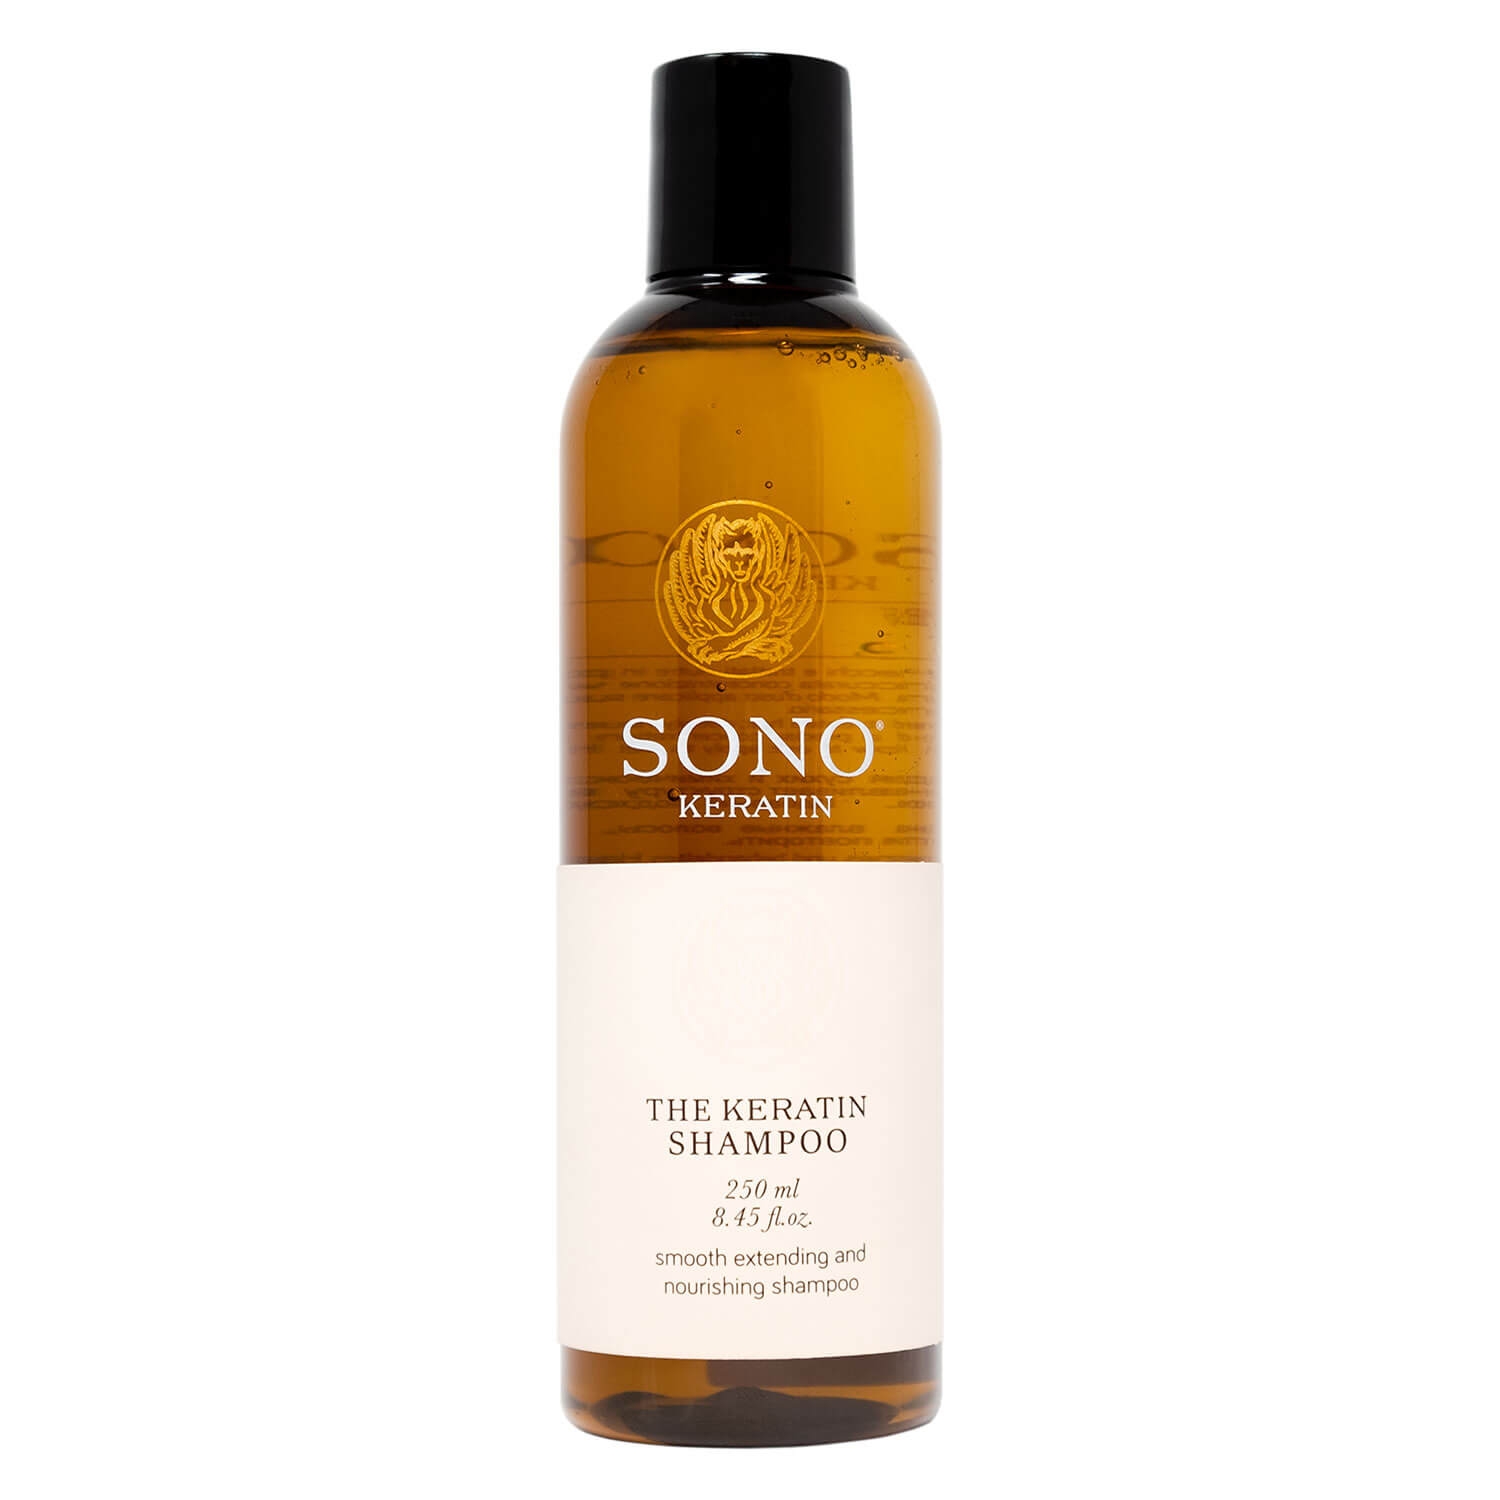 Produktbild von SONO Keratin - The Keratin Shampoo